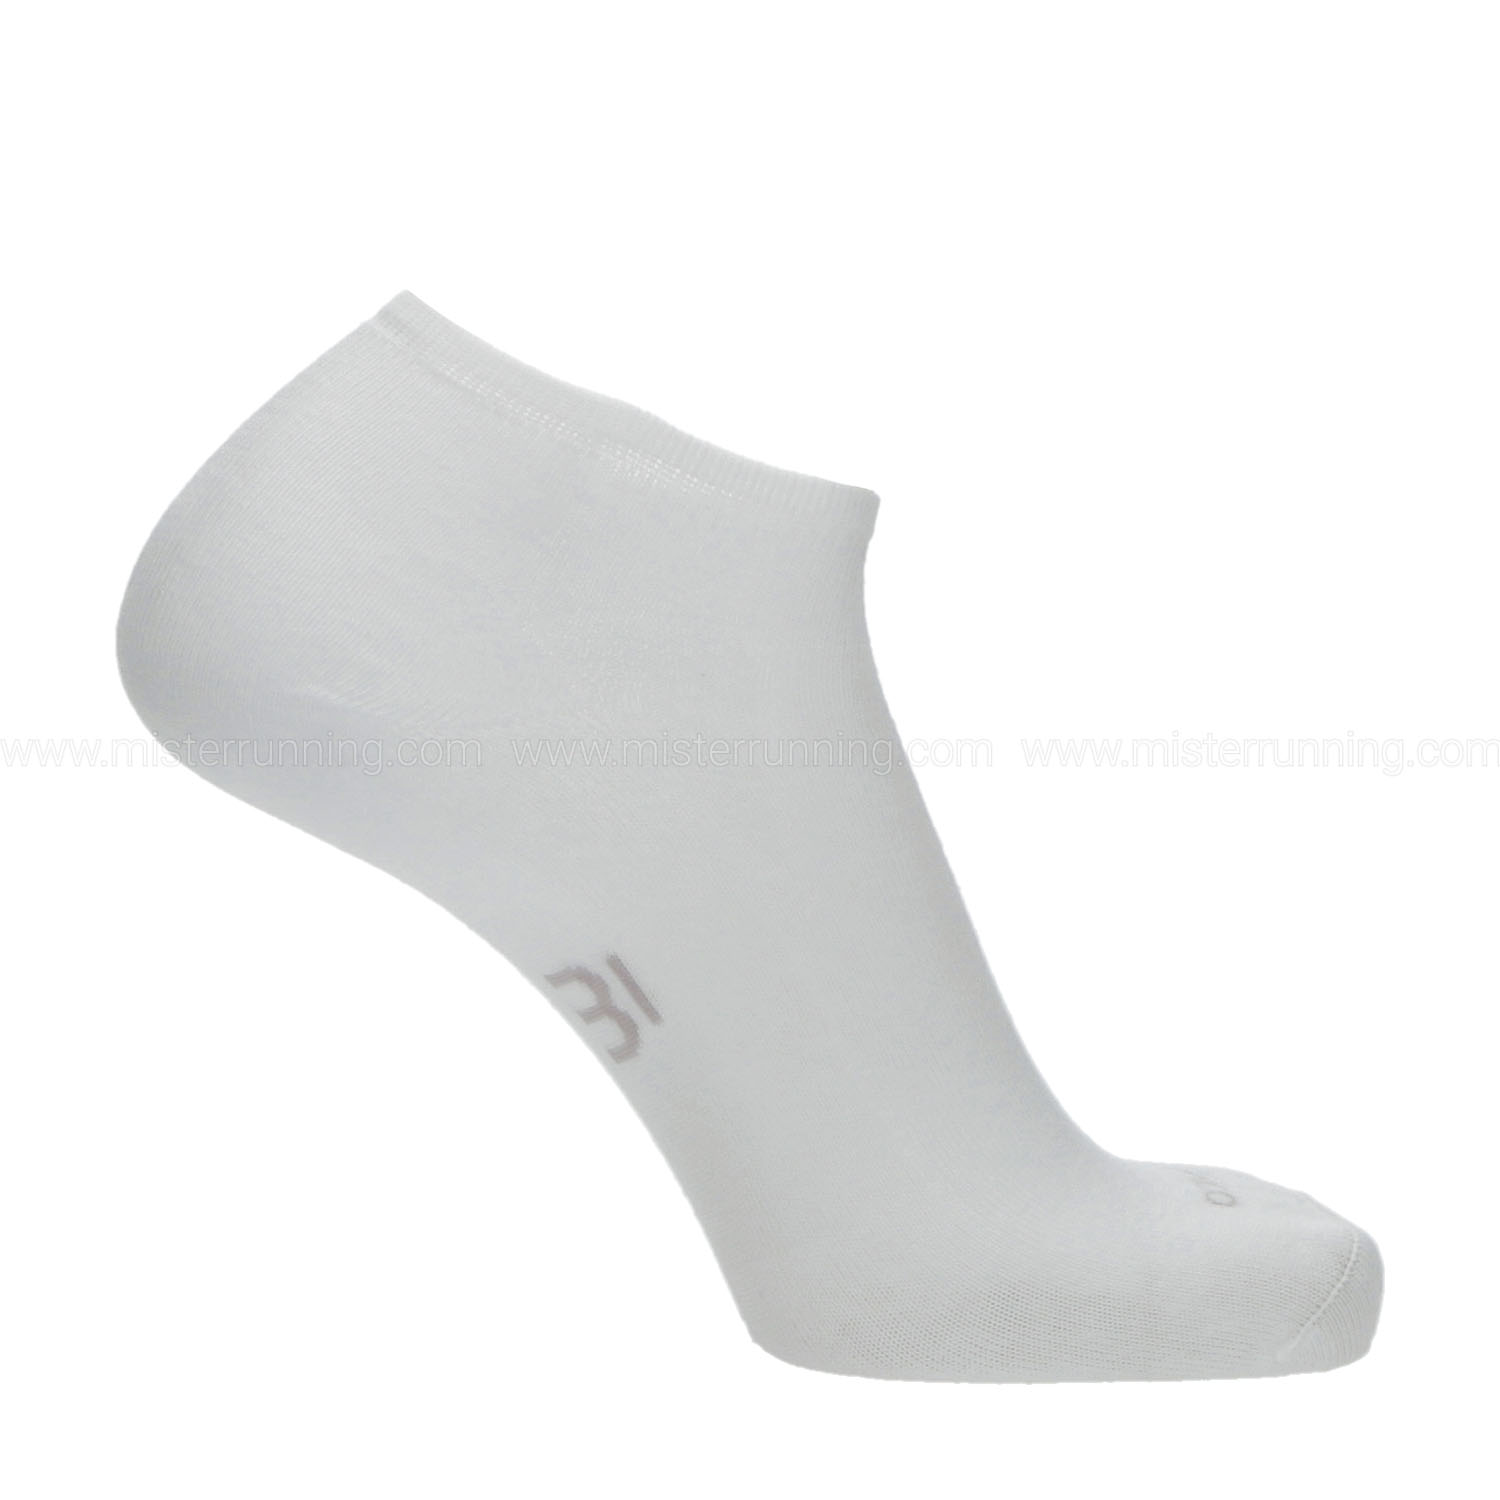 Mico Light Weight x 3 Socks - Bianco